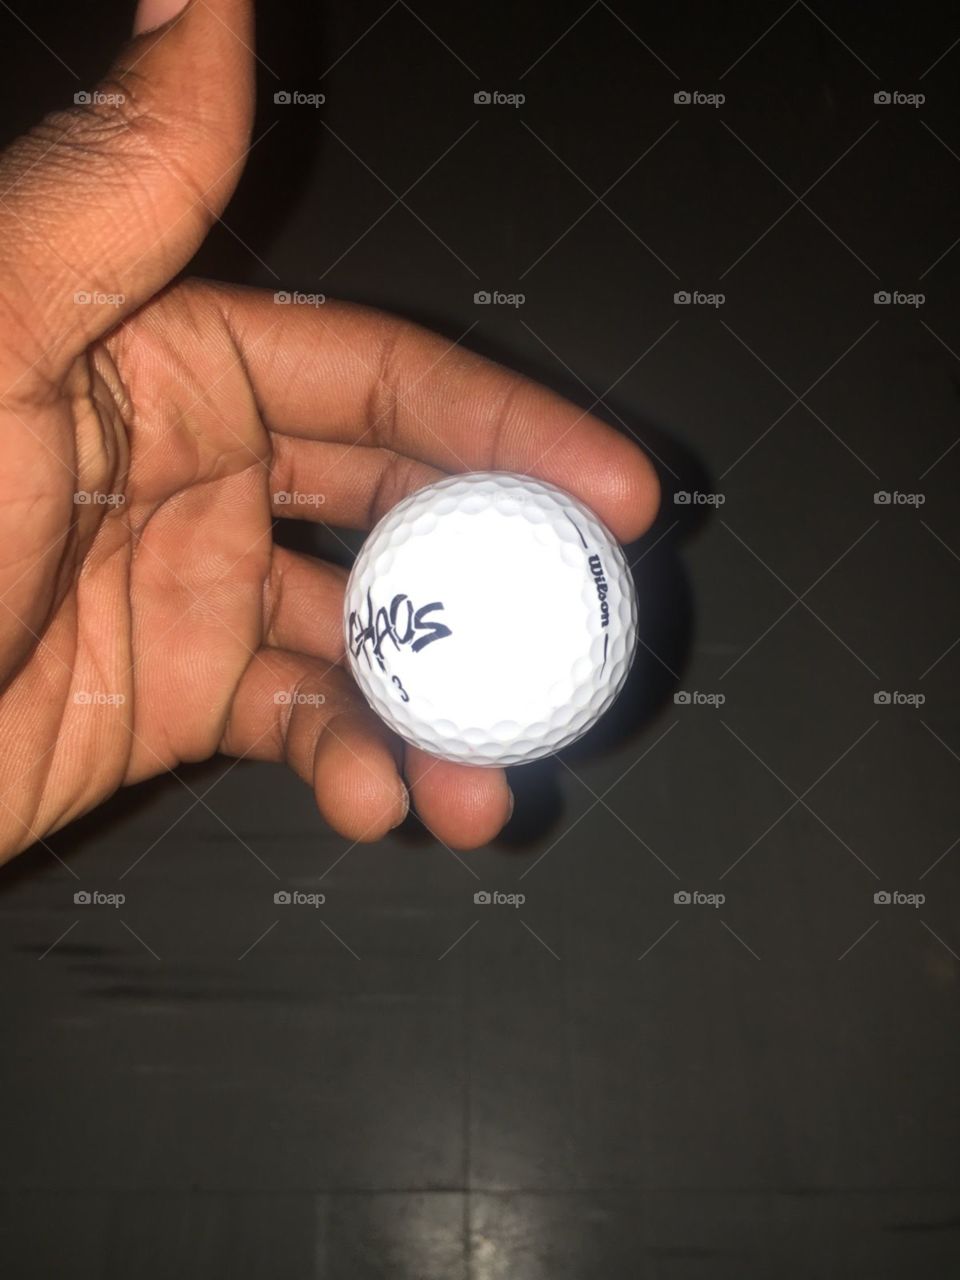 My favorite golf ball 